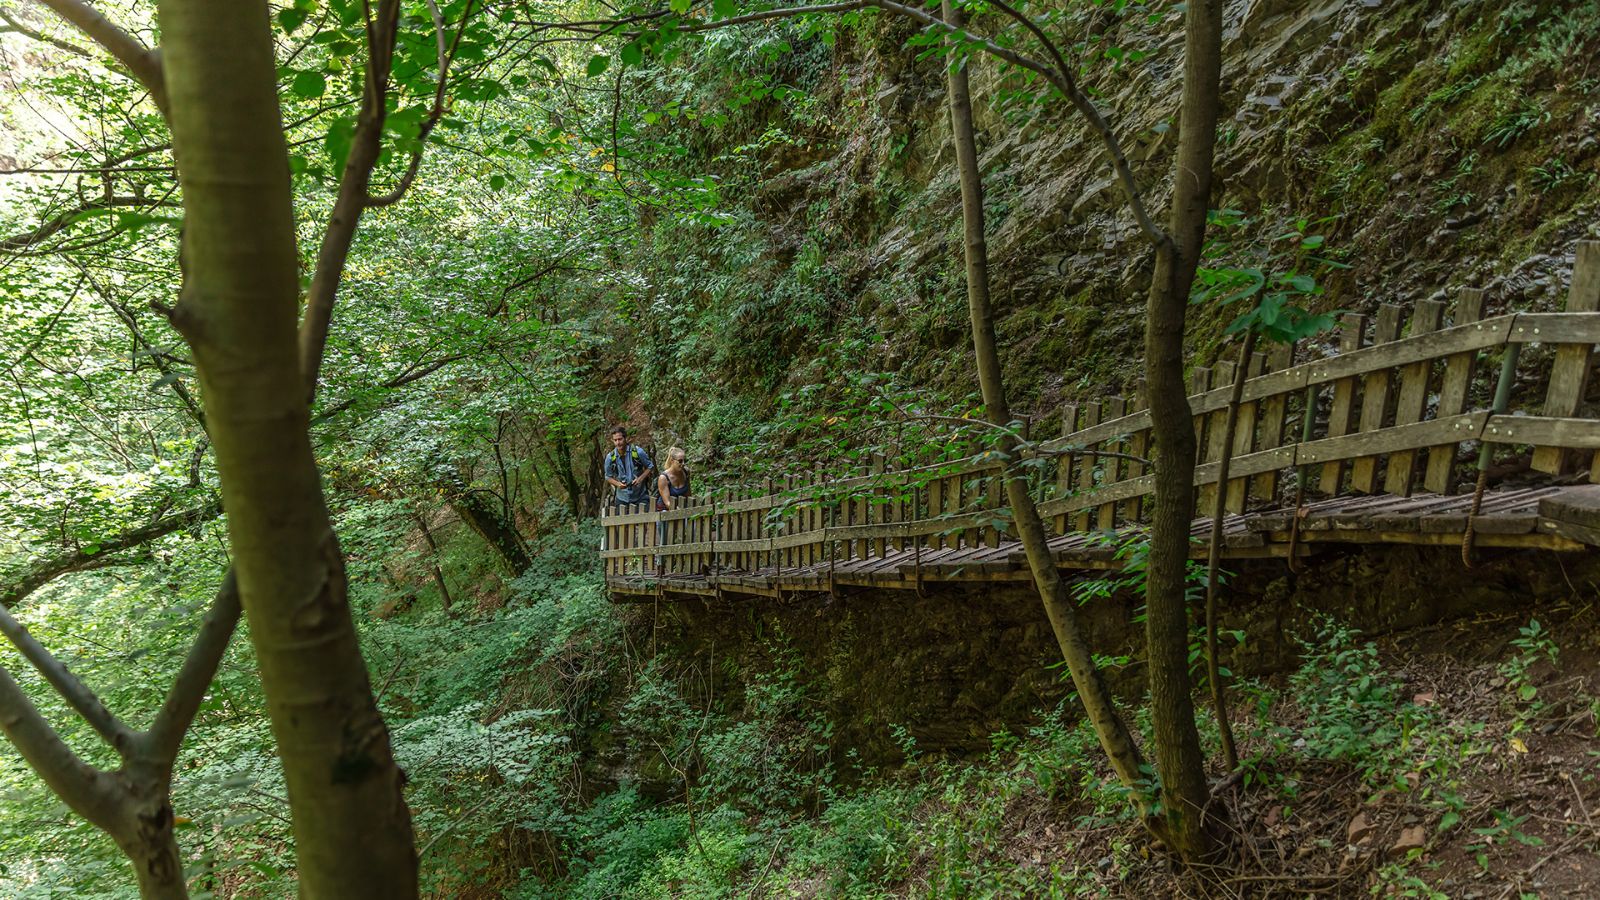 Hiking trail in the Breggia Gorge Park.